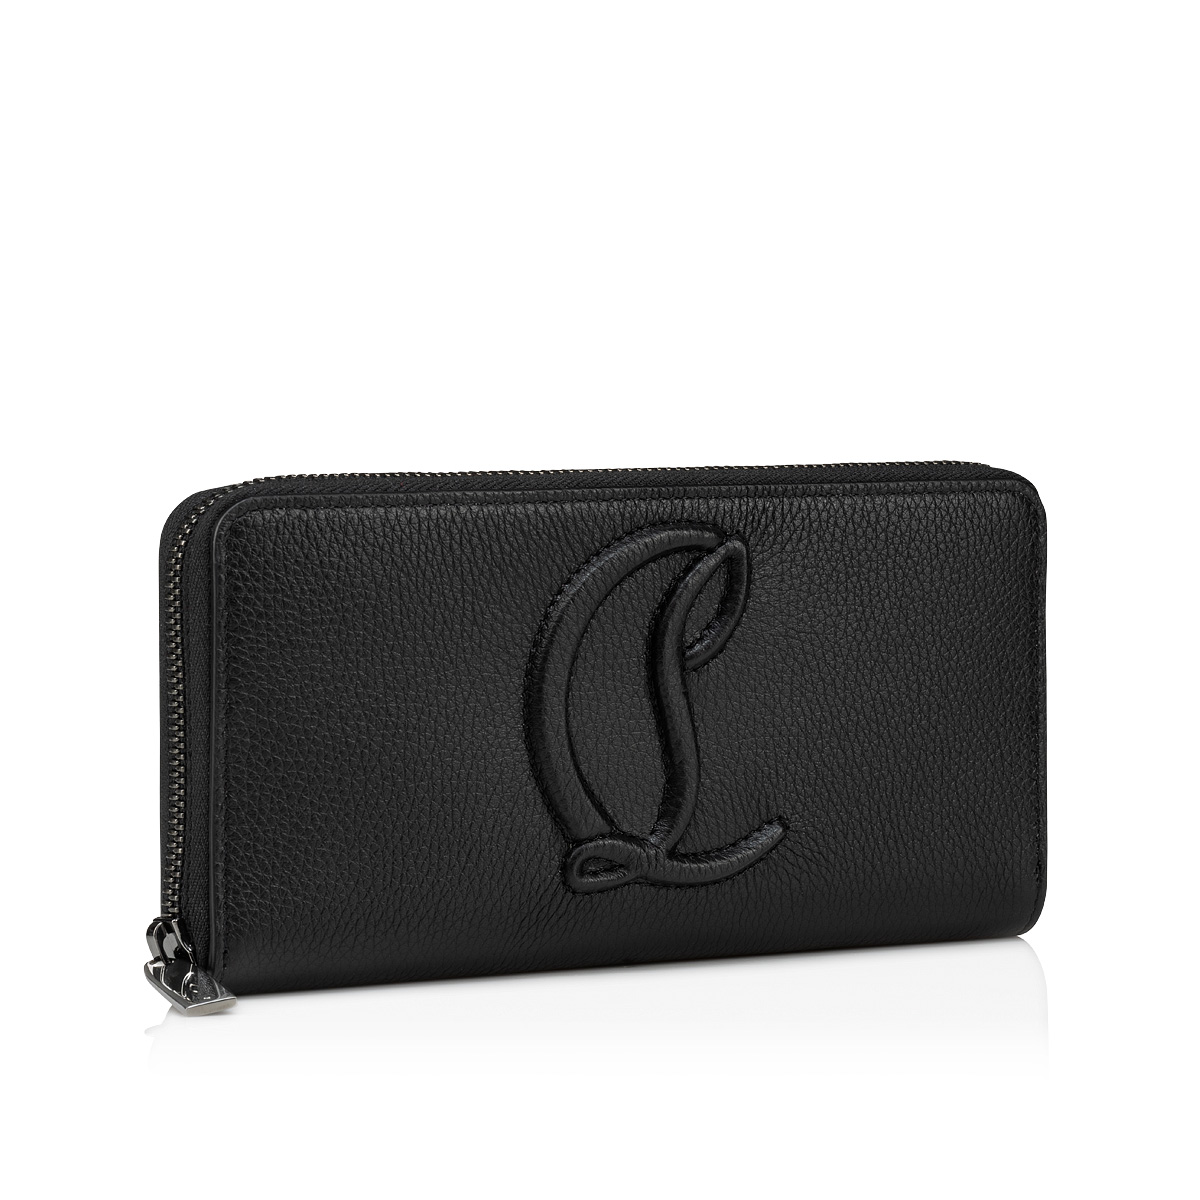 Christian Louboutin Men's Empire Two-Tone Leather Wallet